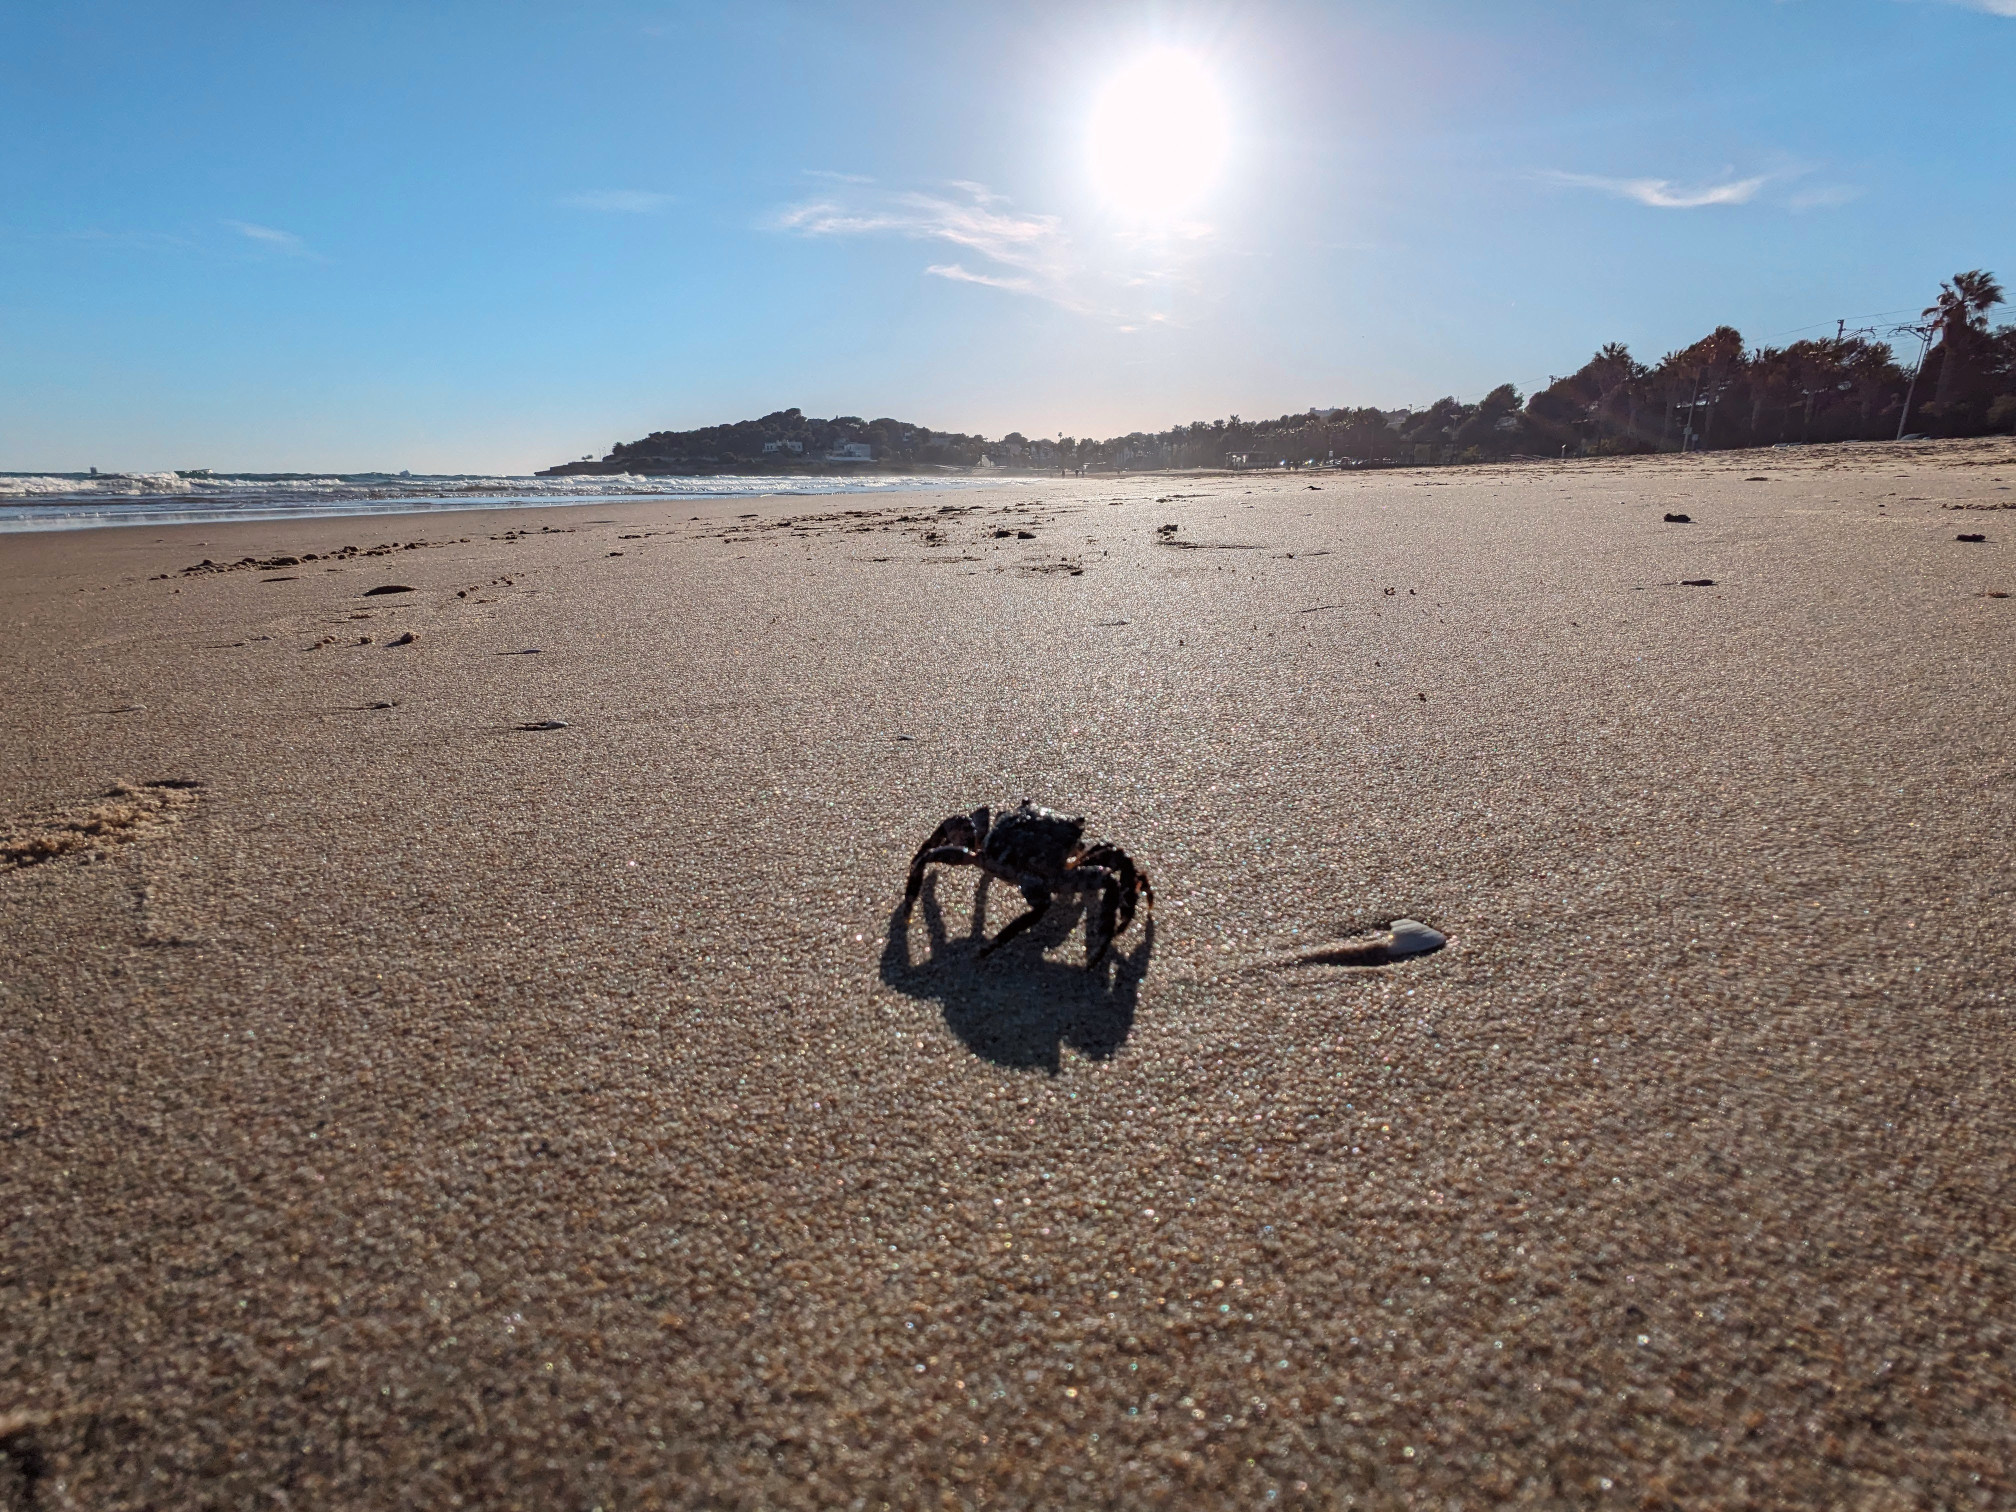 A crab walking over a sunny beach